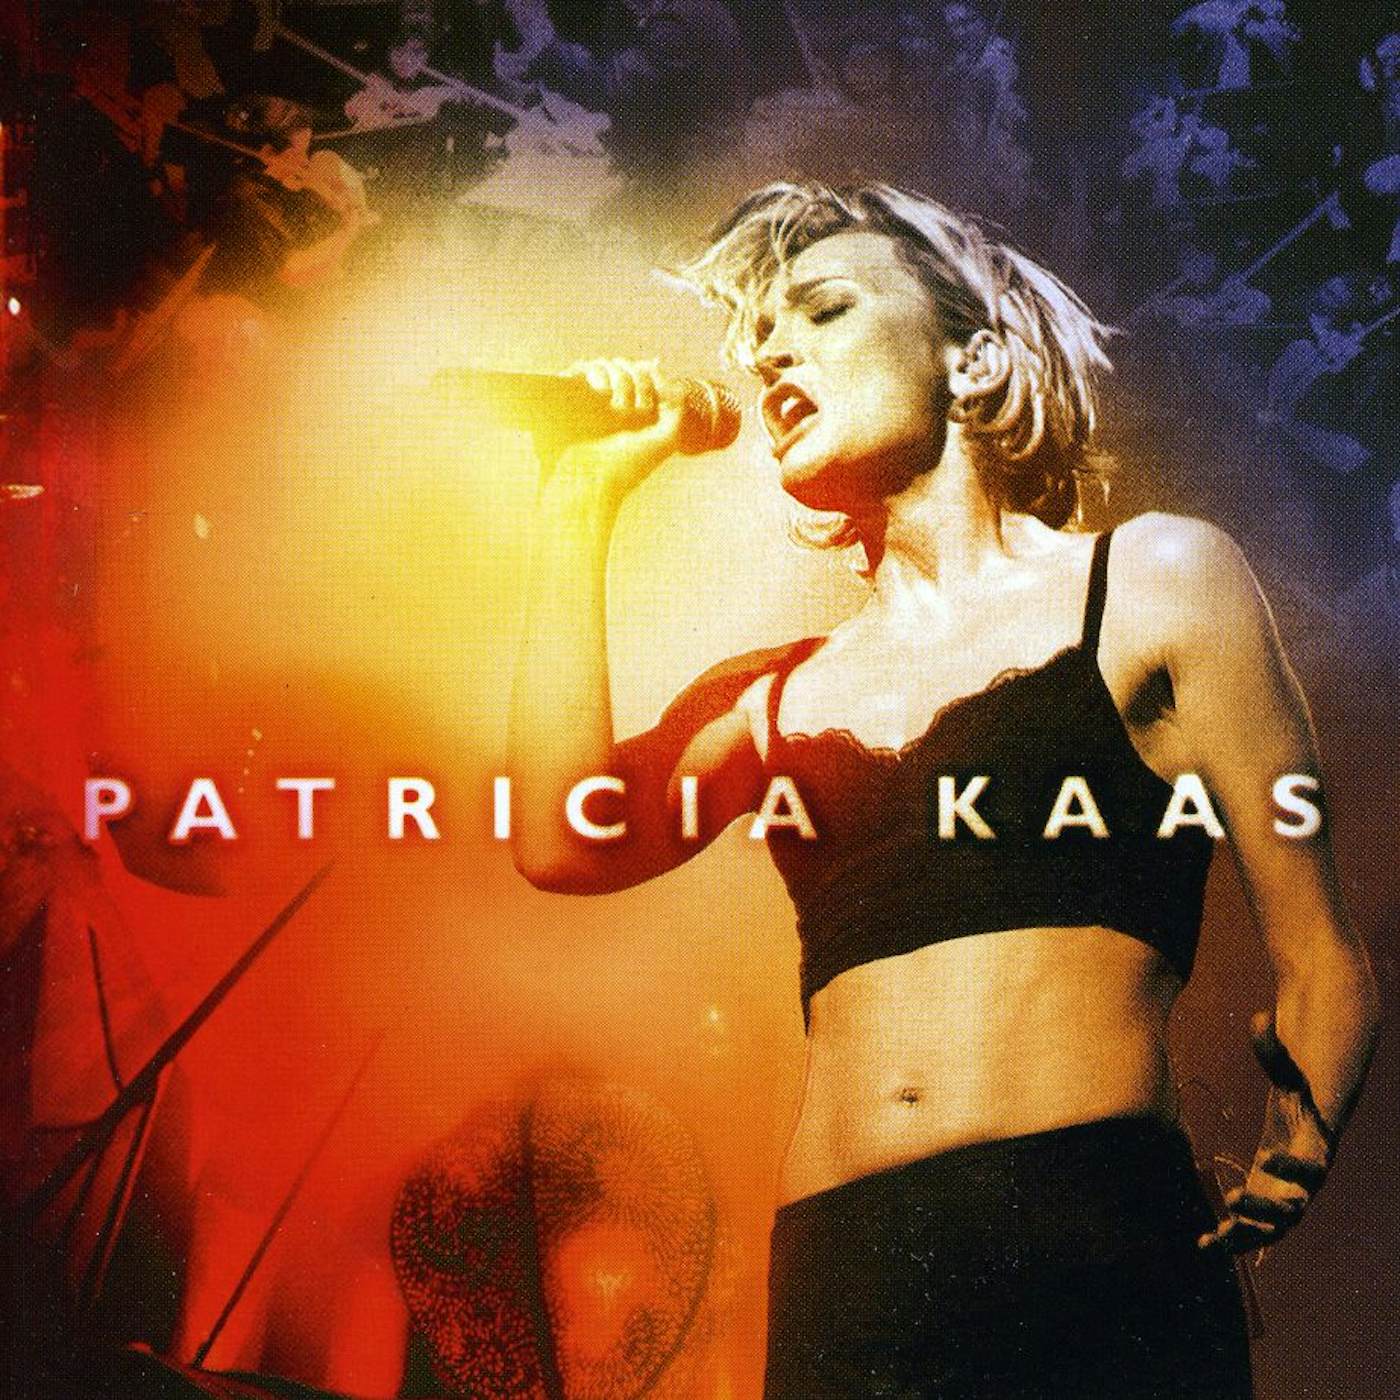 Pat live. Patricia Kaas - ce Sera nous обложка альбома. Patricia Kaas обложки альбомов. Patricia Kaas 2000. 2000 - Patricia Kaas. Ce Sera nous.